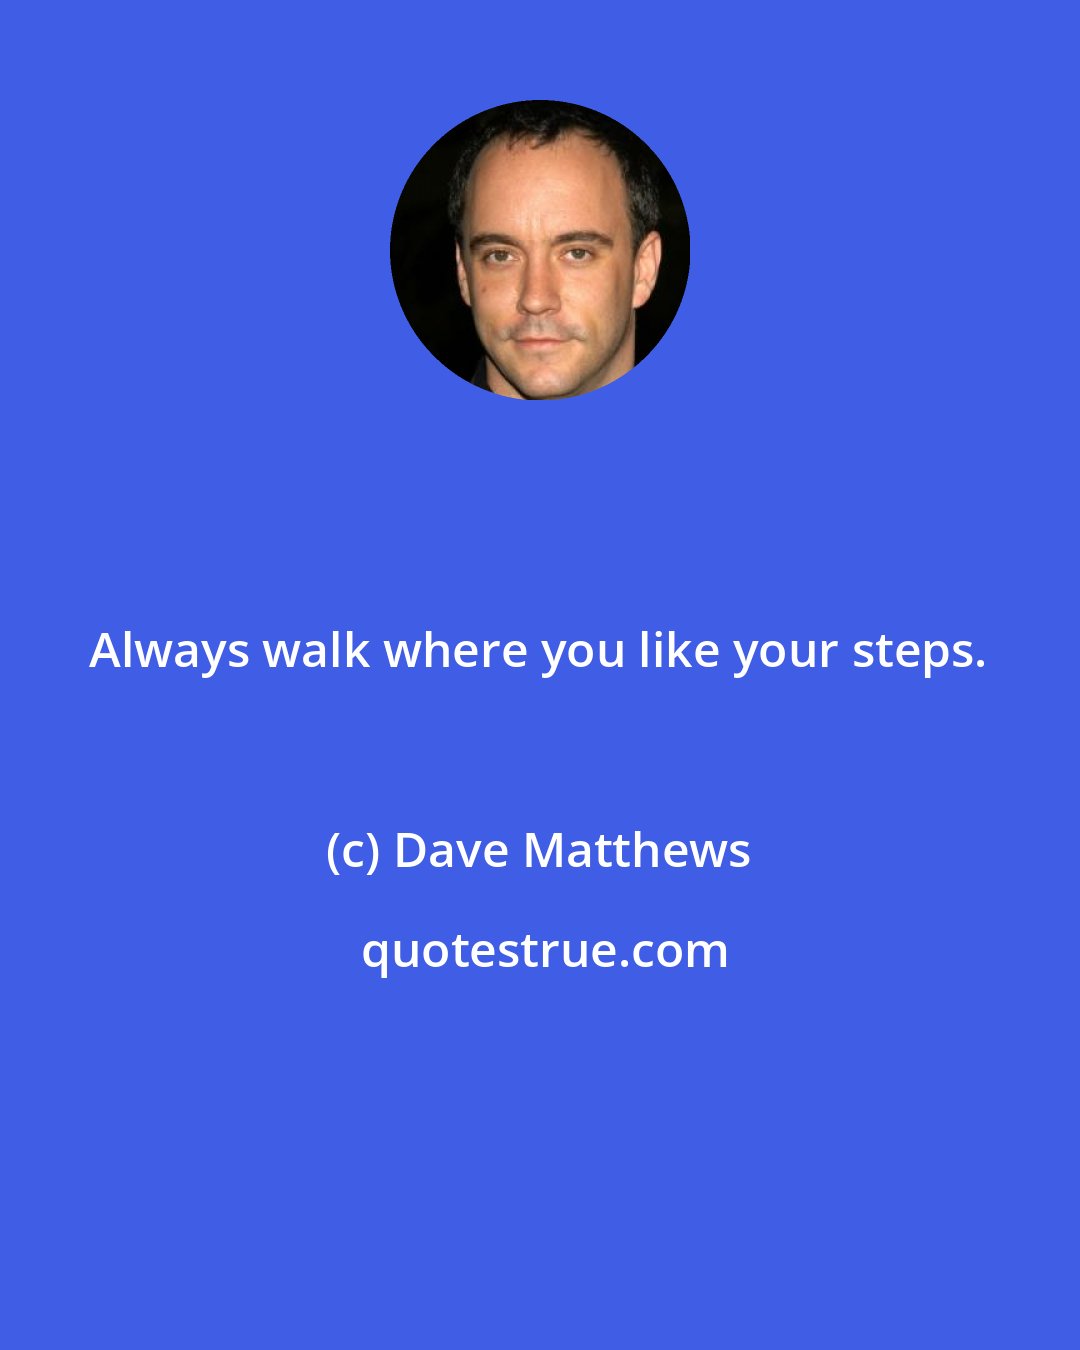 Dave Matthews: Always walk where you like your steps.